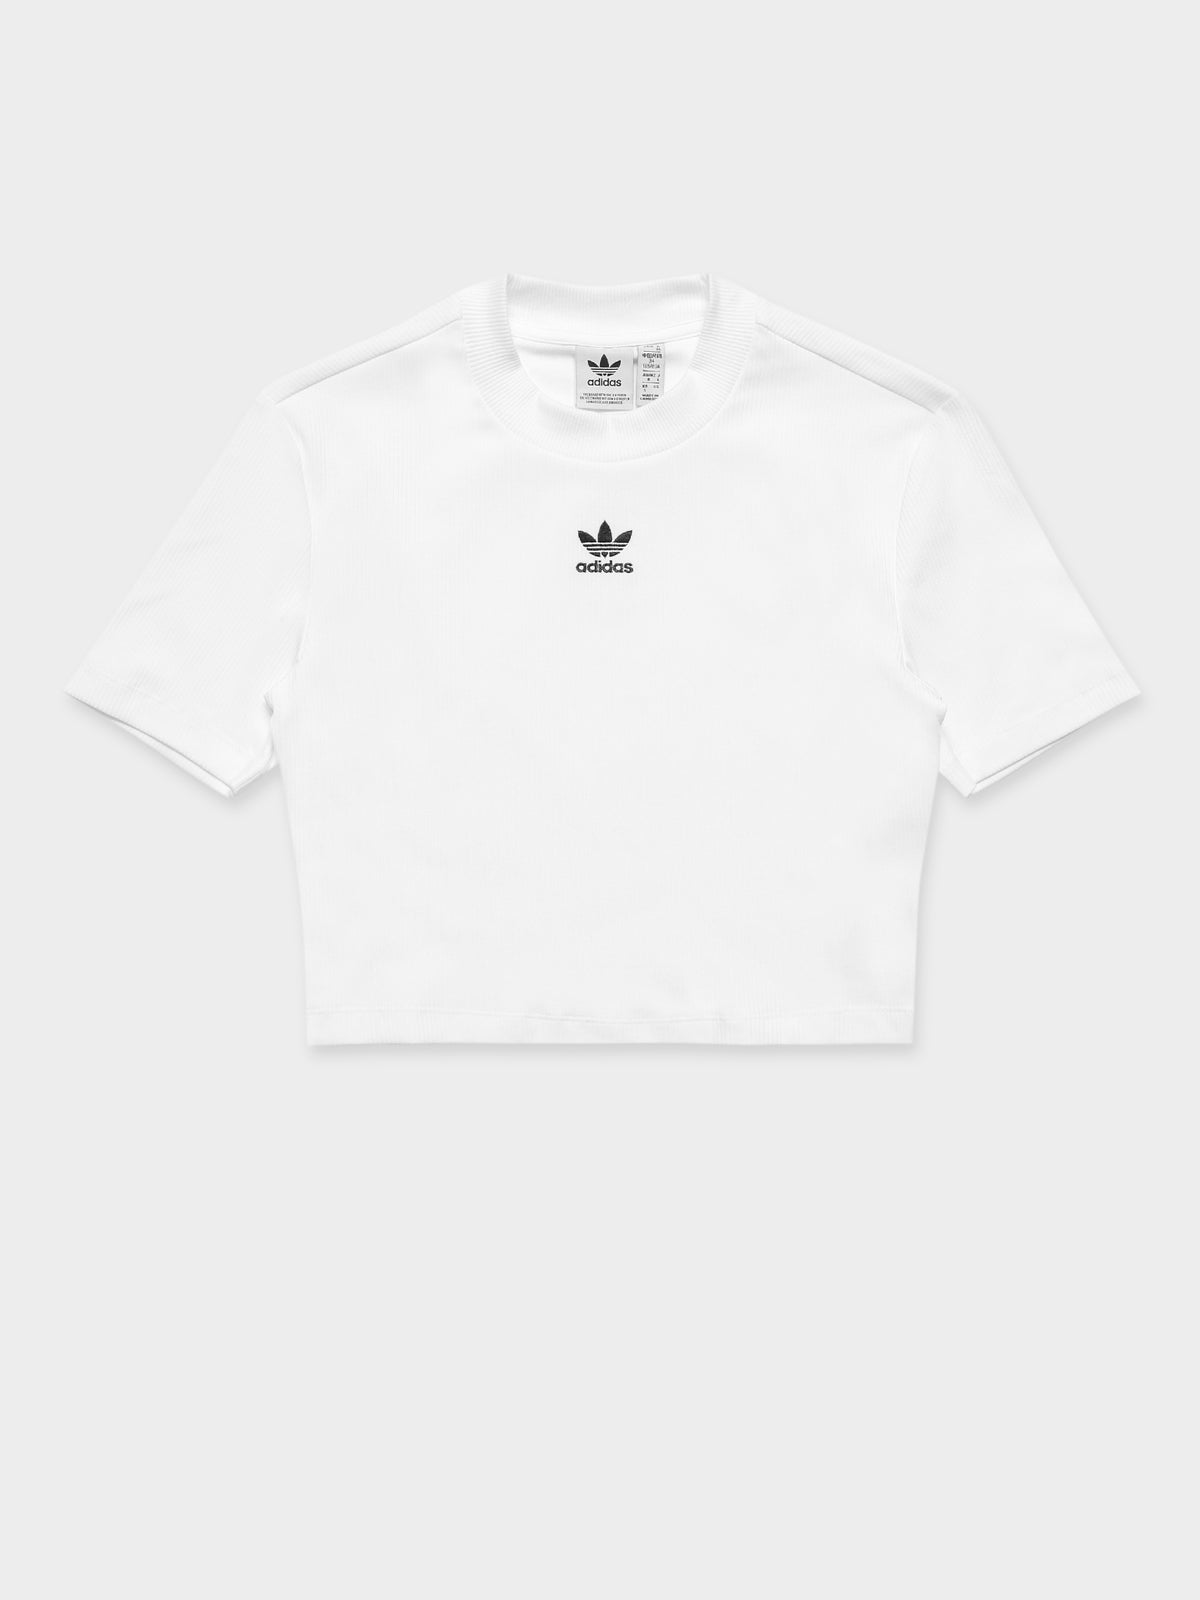 Adidas Cropped Rib Baby T-Shirt in White